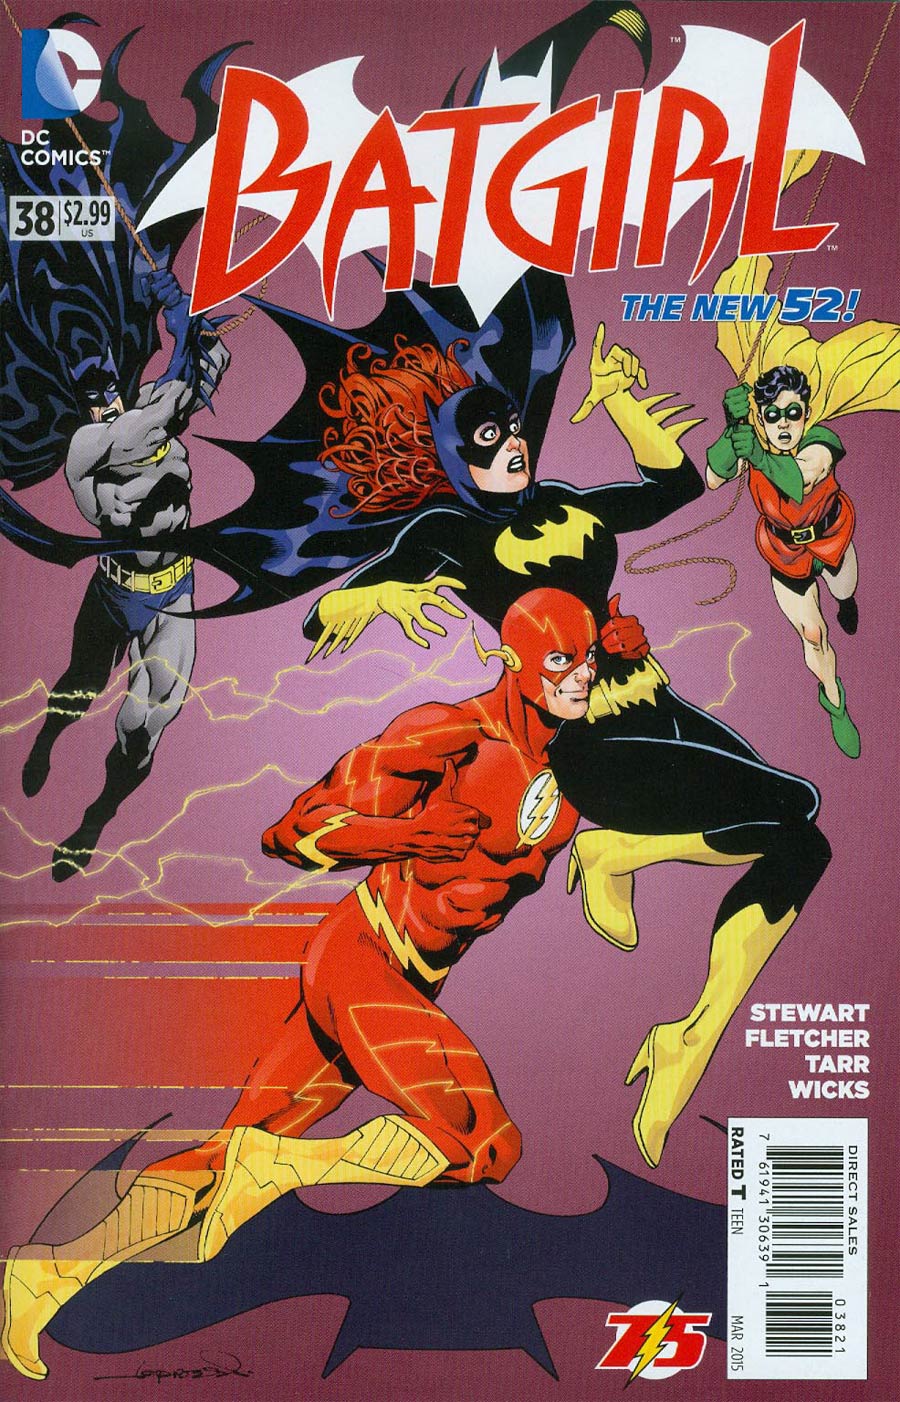 Batgirl Vol 4 #38 Cover B Variant Aaron Lopresti Flash 75th Anniversary Cover